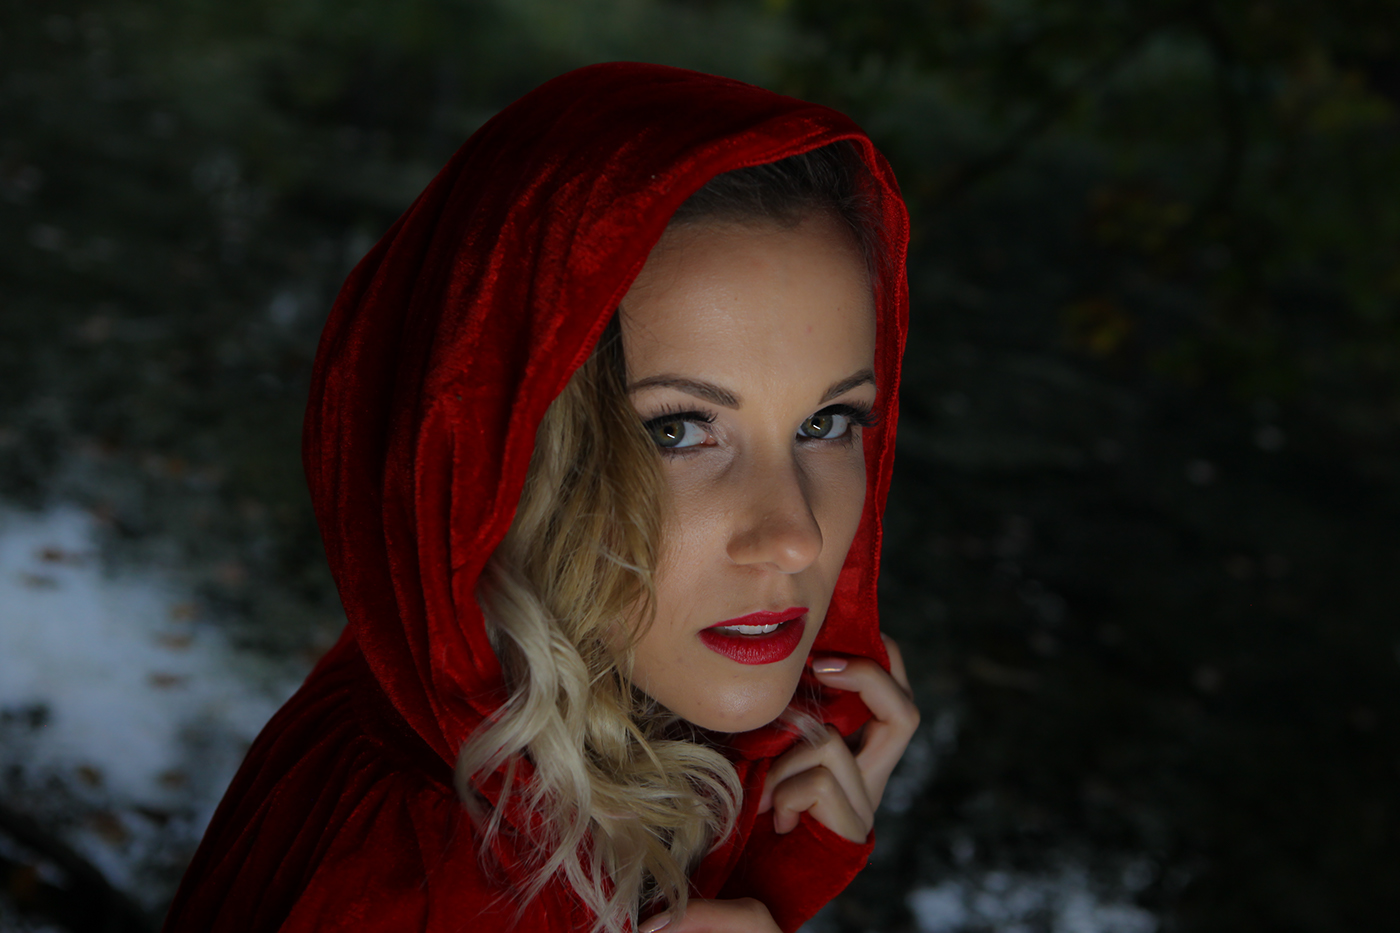 redridinghood red cape photo shoot forest Girl alone model Canon Photography  innocence tale portfolio Portraiture